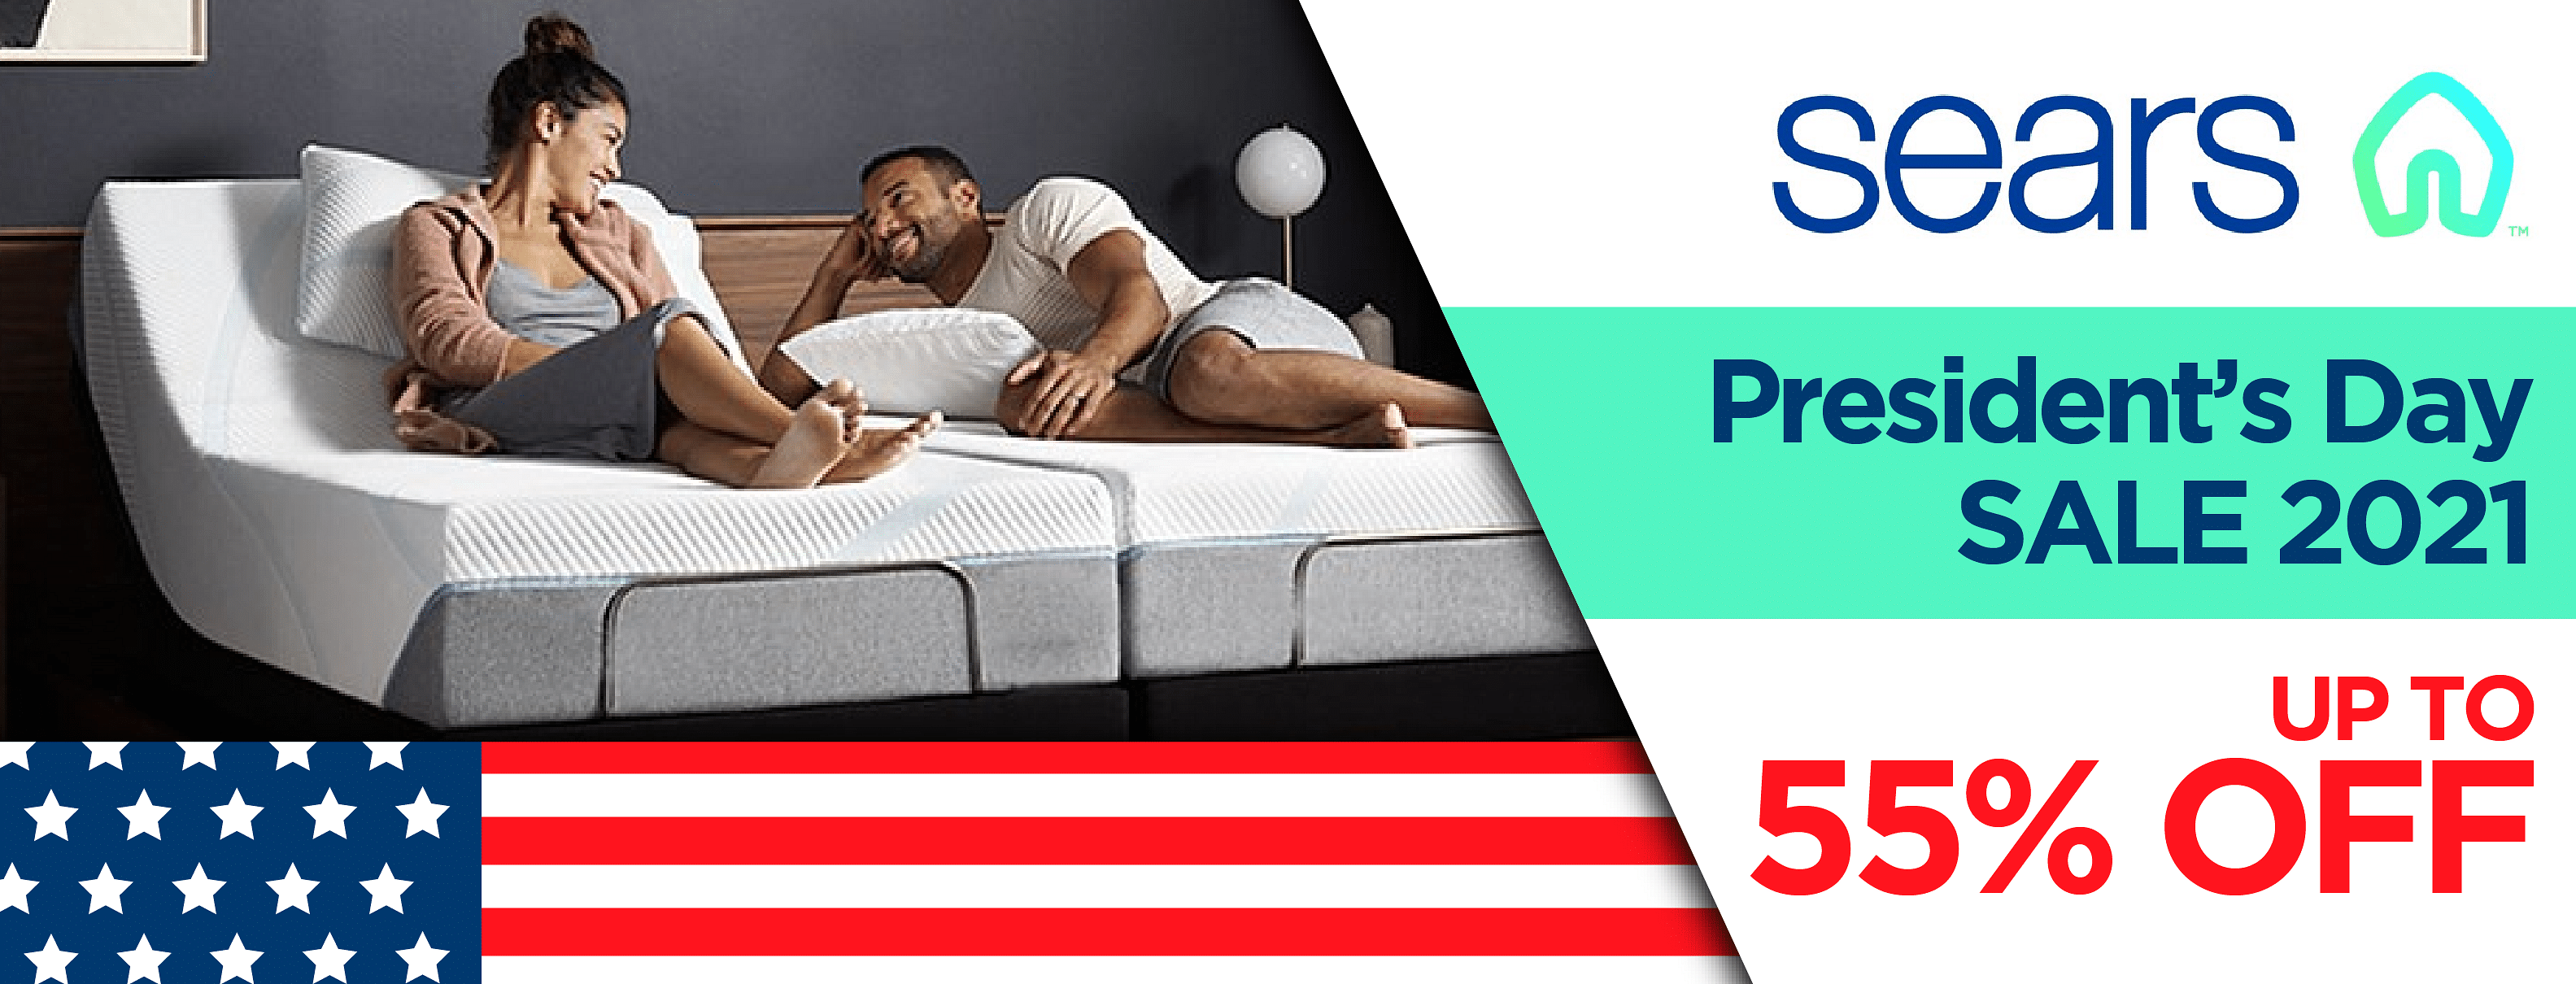 presidents day mattress sale sears